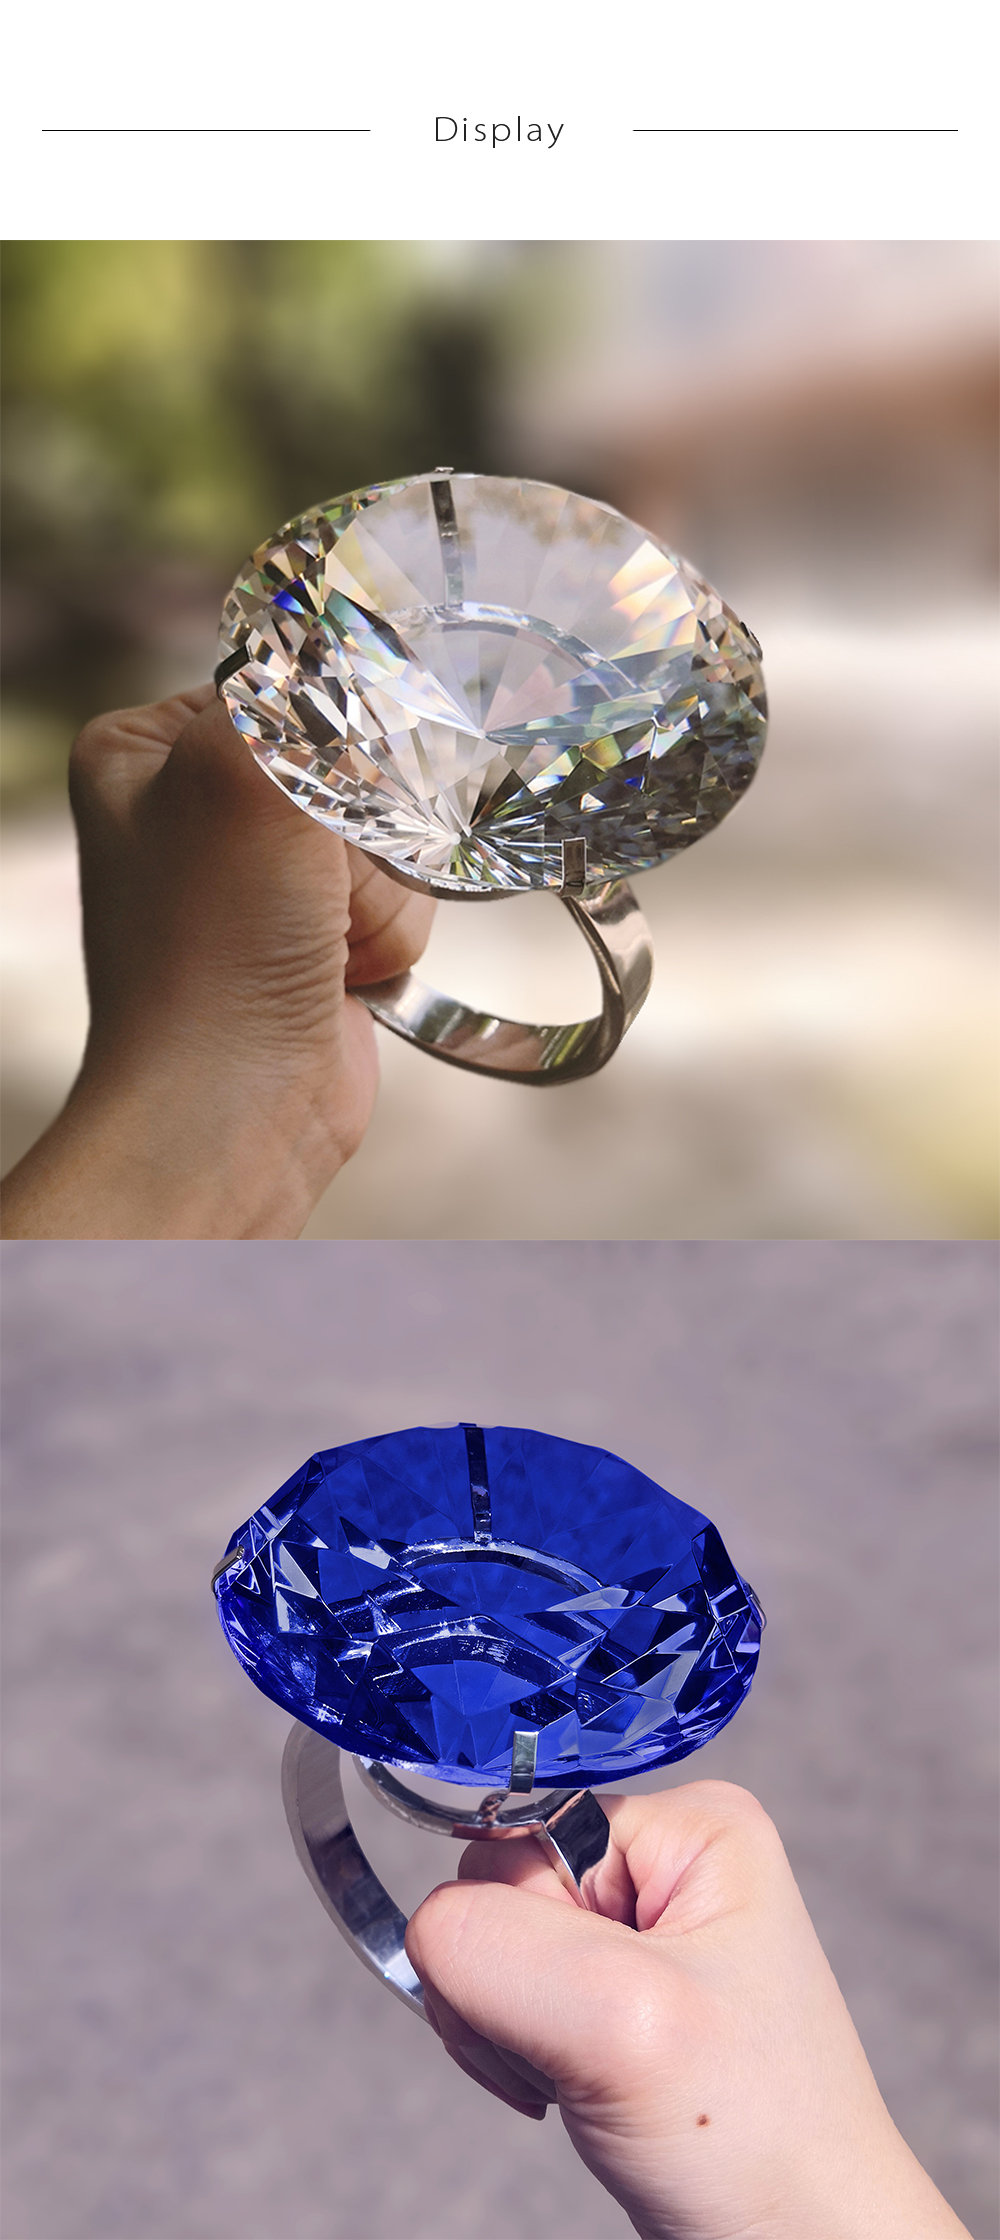 Big Diamond Rings - 3, 4, 5 Carat | Natural and Lab Grown Diamonds